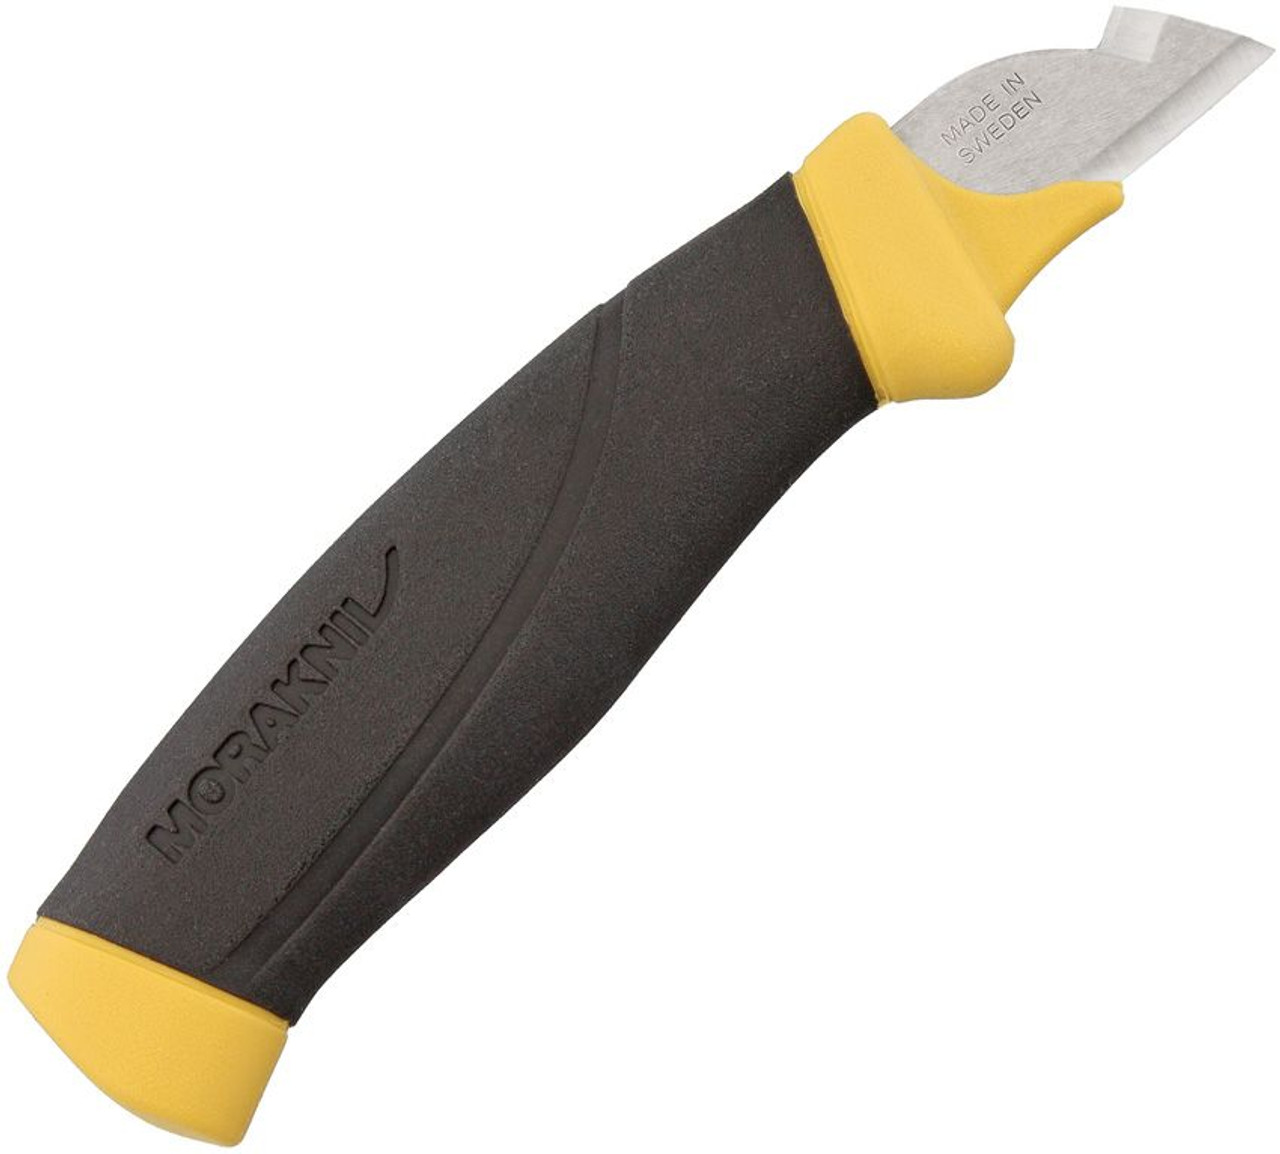 Mora Electrician Knife (FT01522) 1.75" Satin Stainless Steel Plain Blade, Black and Yellow Polypropylene Handle, Black Polymer Sheath